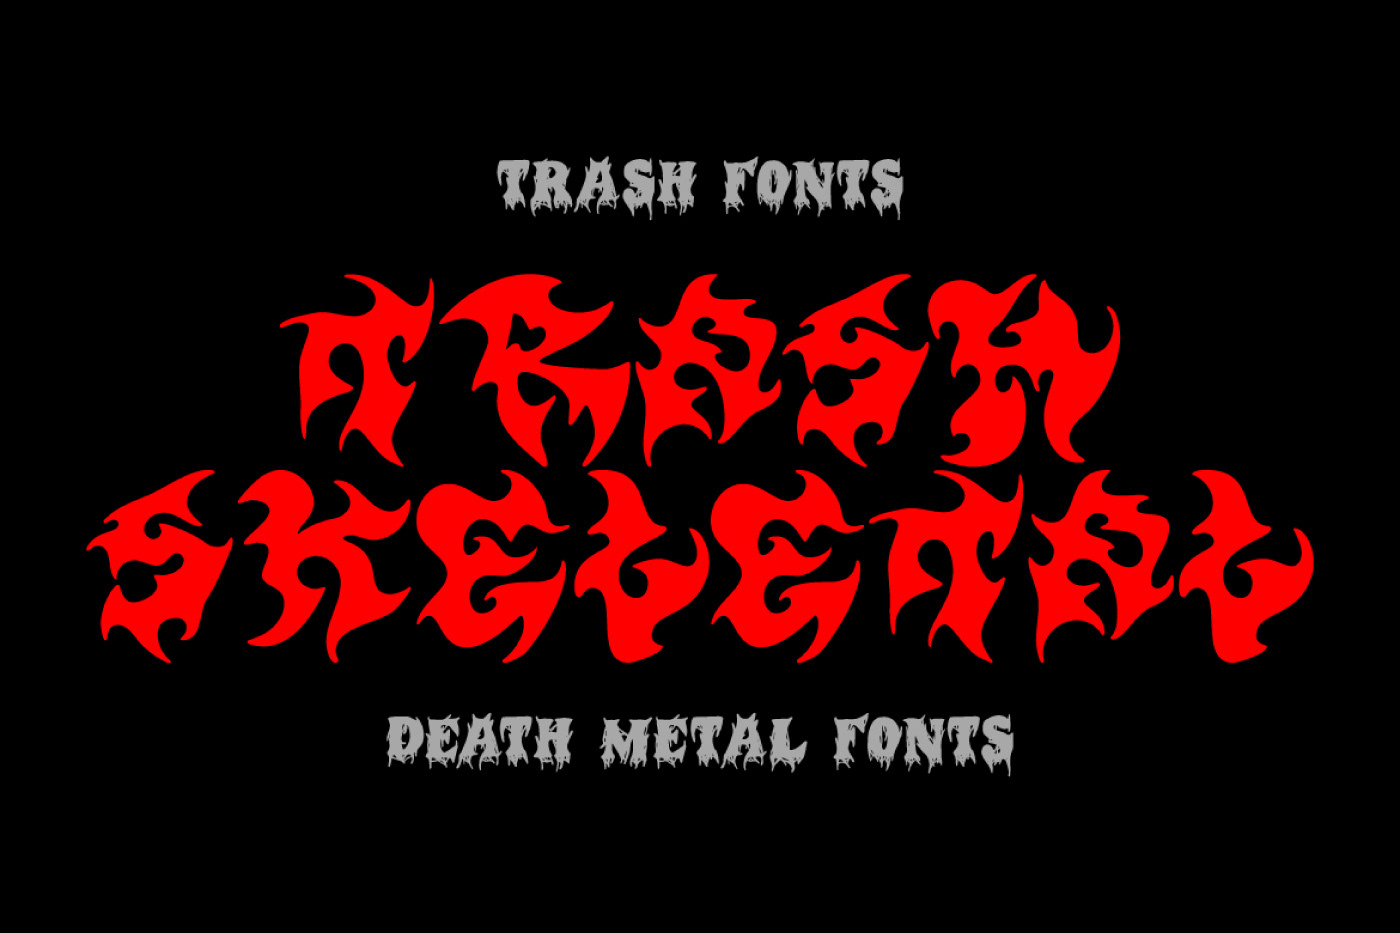 graphic design  trash fonts metal font death metal font black metal font horror font halloween font merchandise font music font SCARY FONT